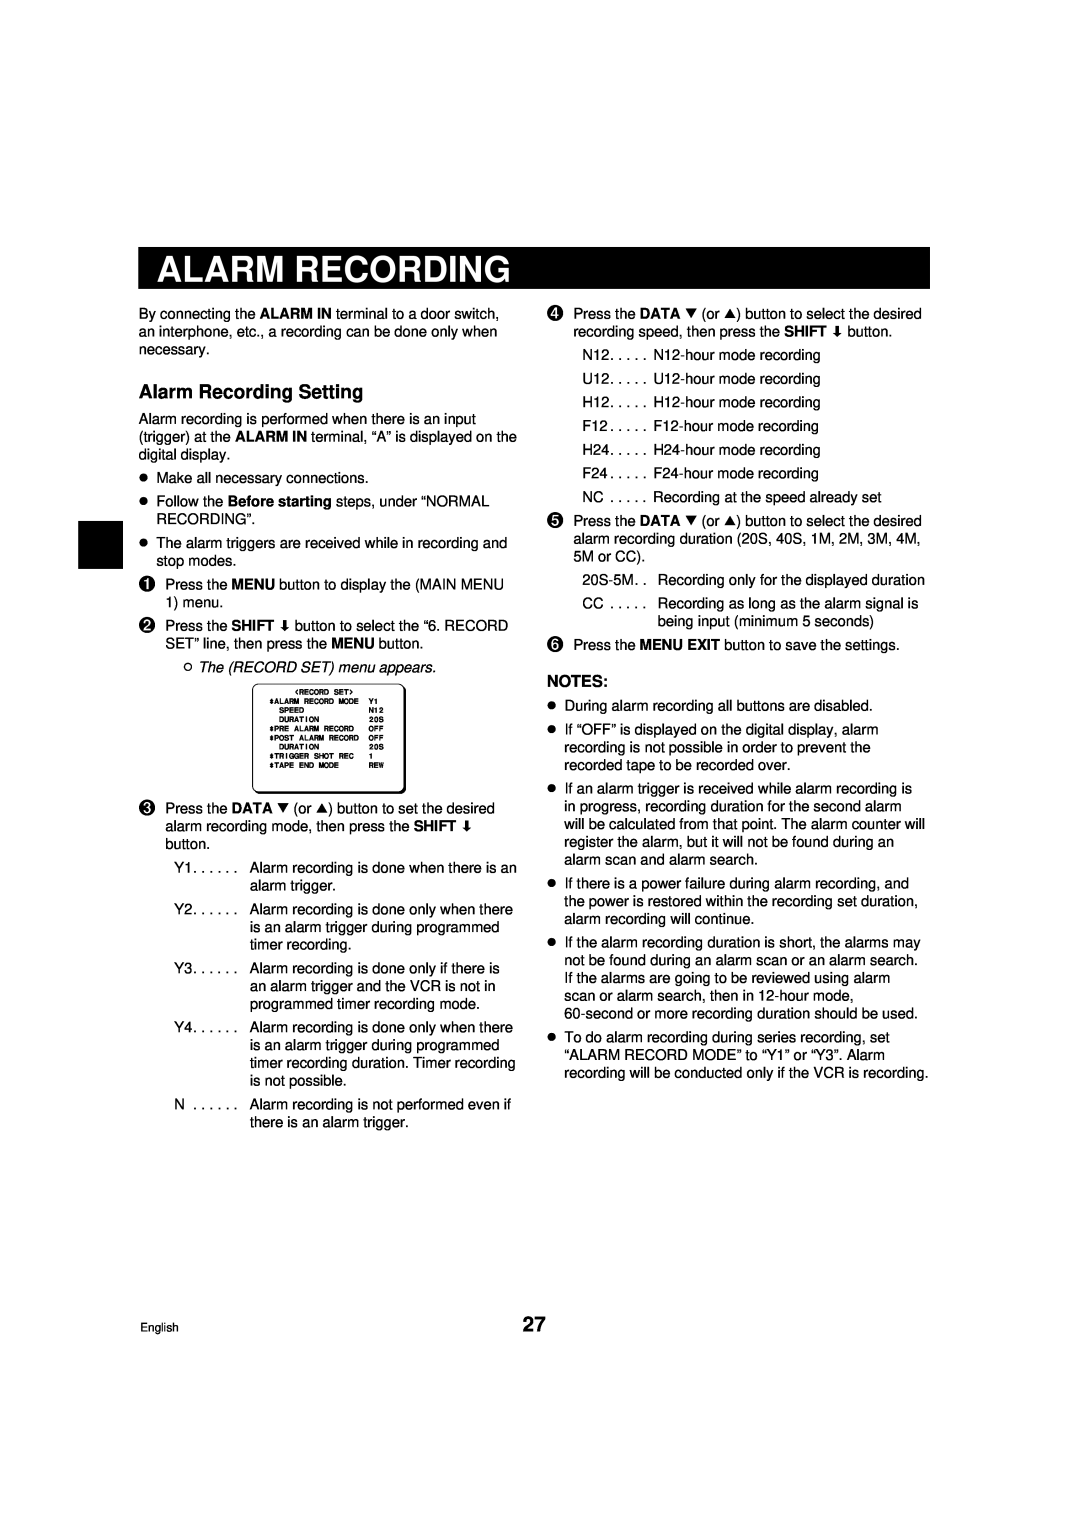 Sanyo DTL-4800, RD2QD/NA instruction manual Alarm Recording Setting, ø The RECORD SET menu appears 